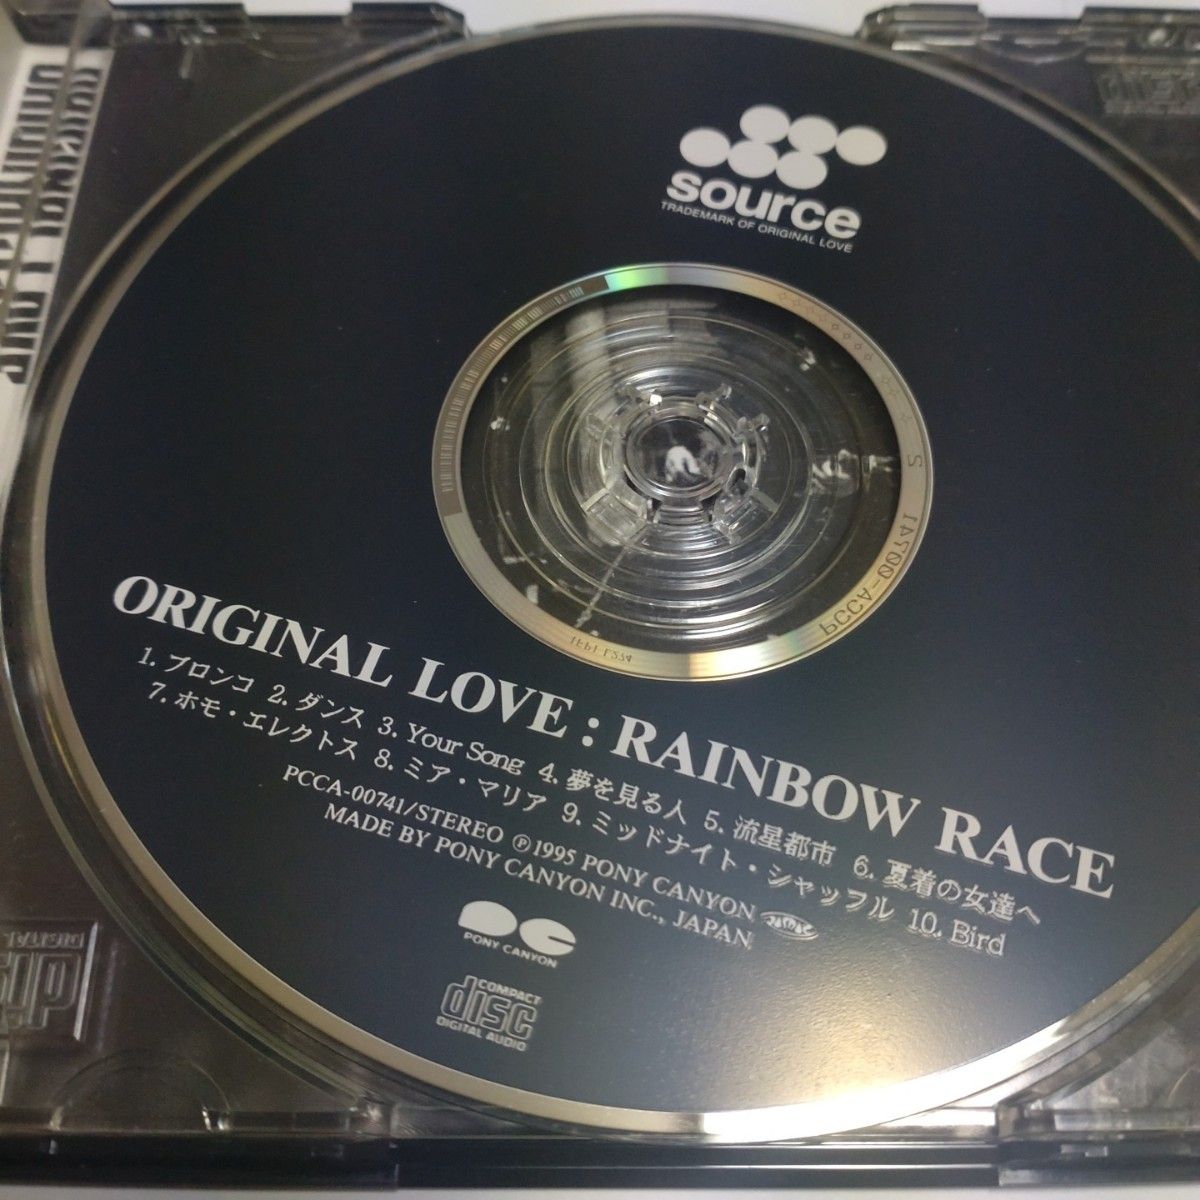 Original Love『RAINBOW RACE』